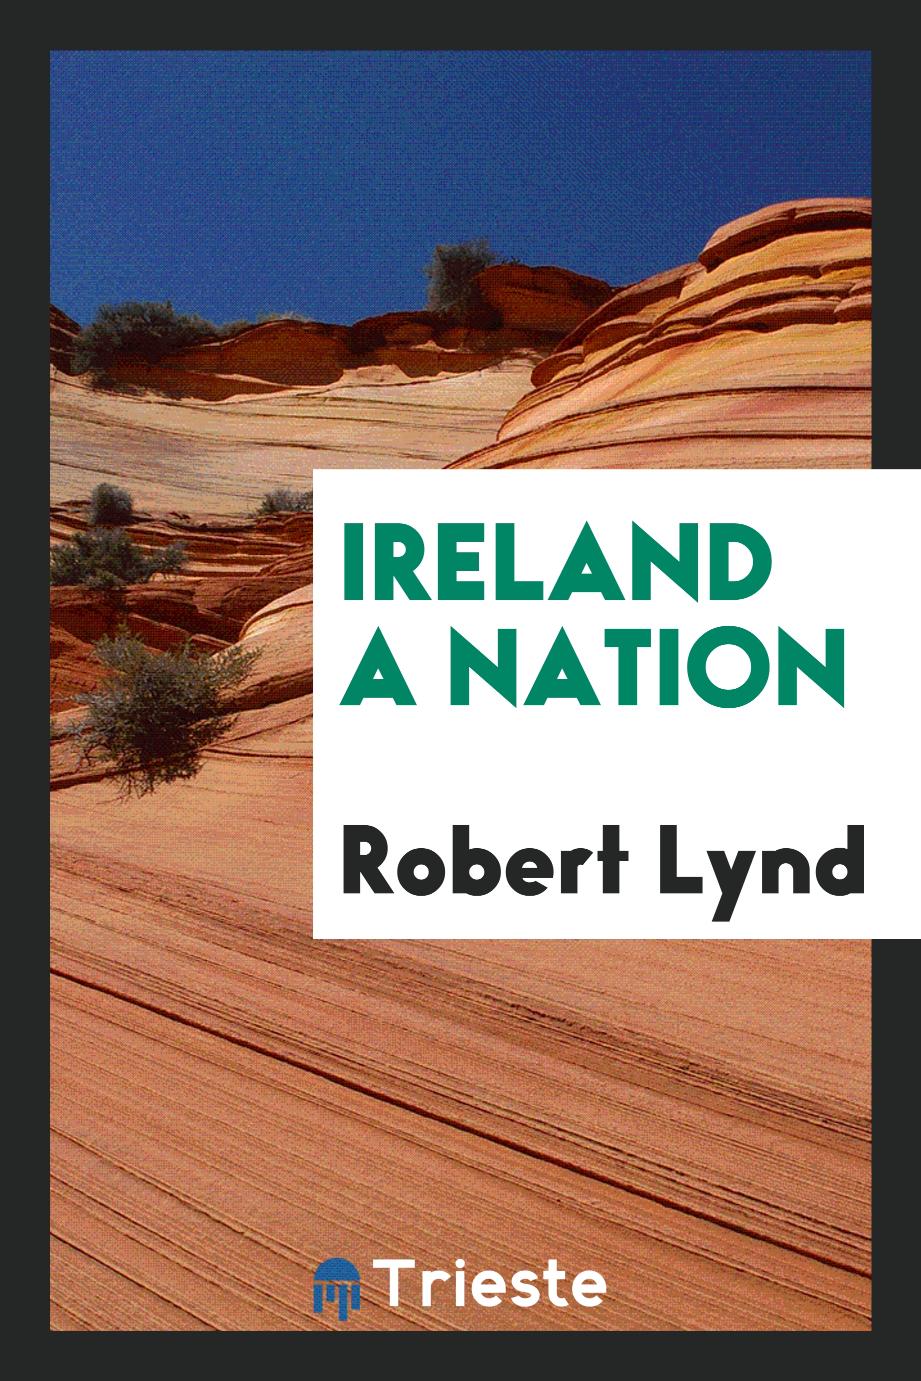 Ireland a nation